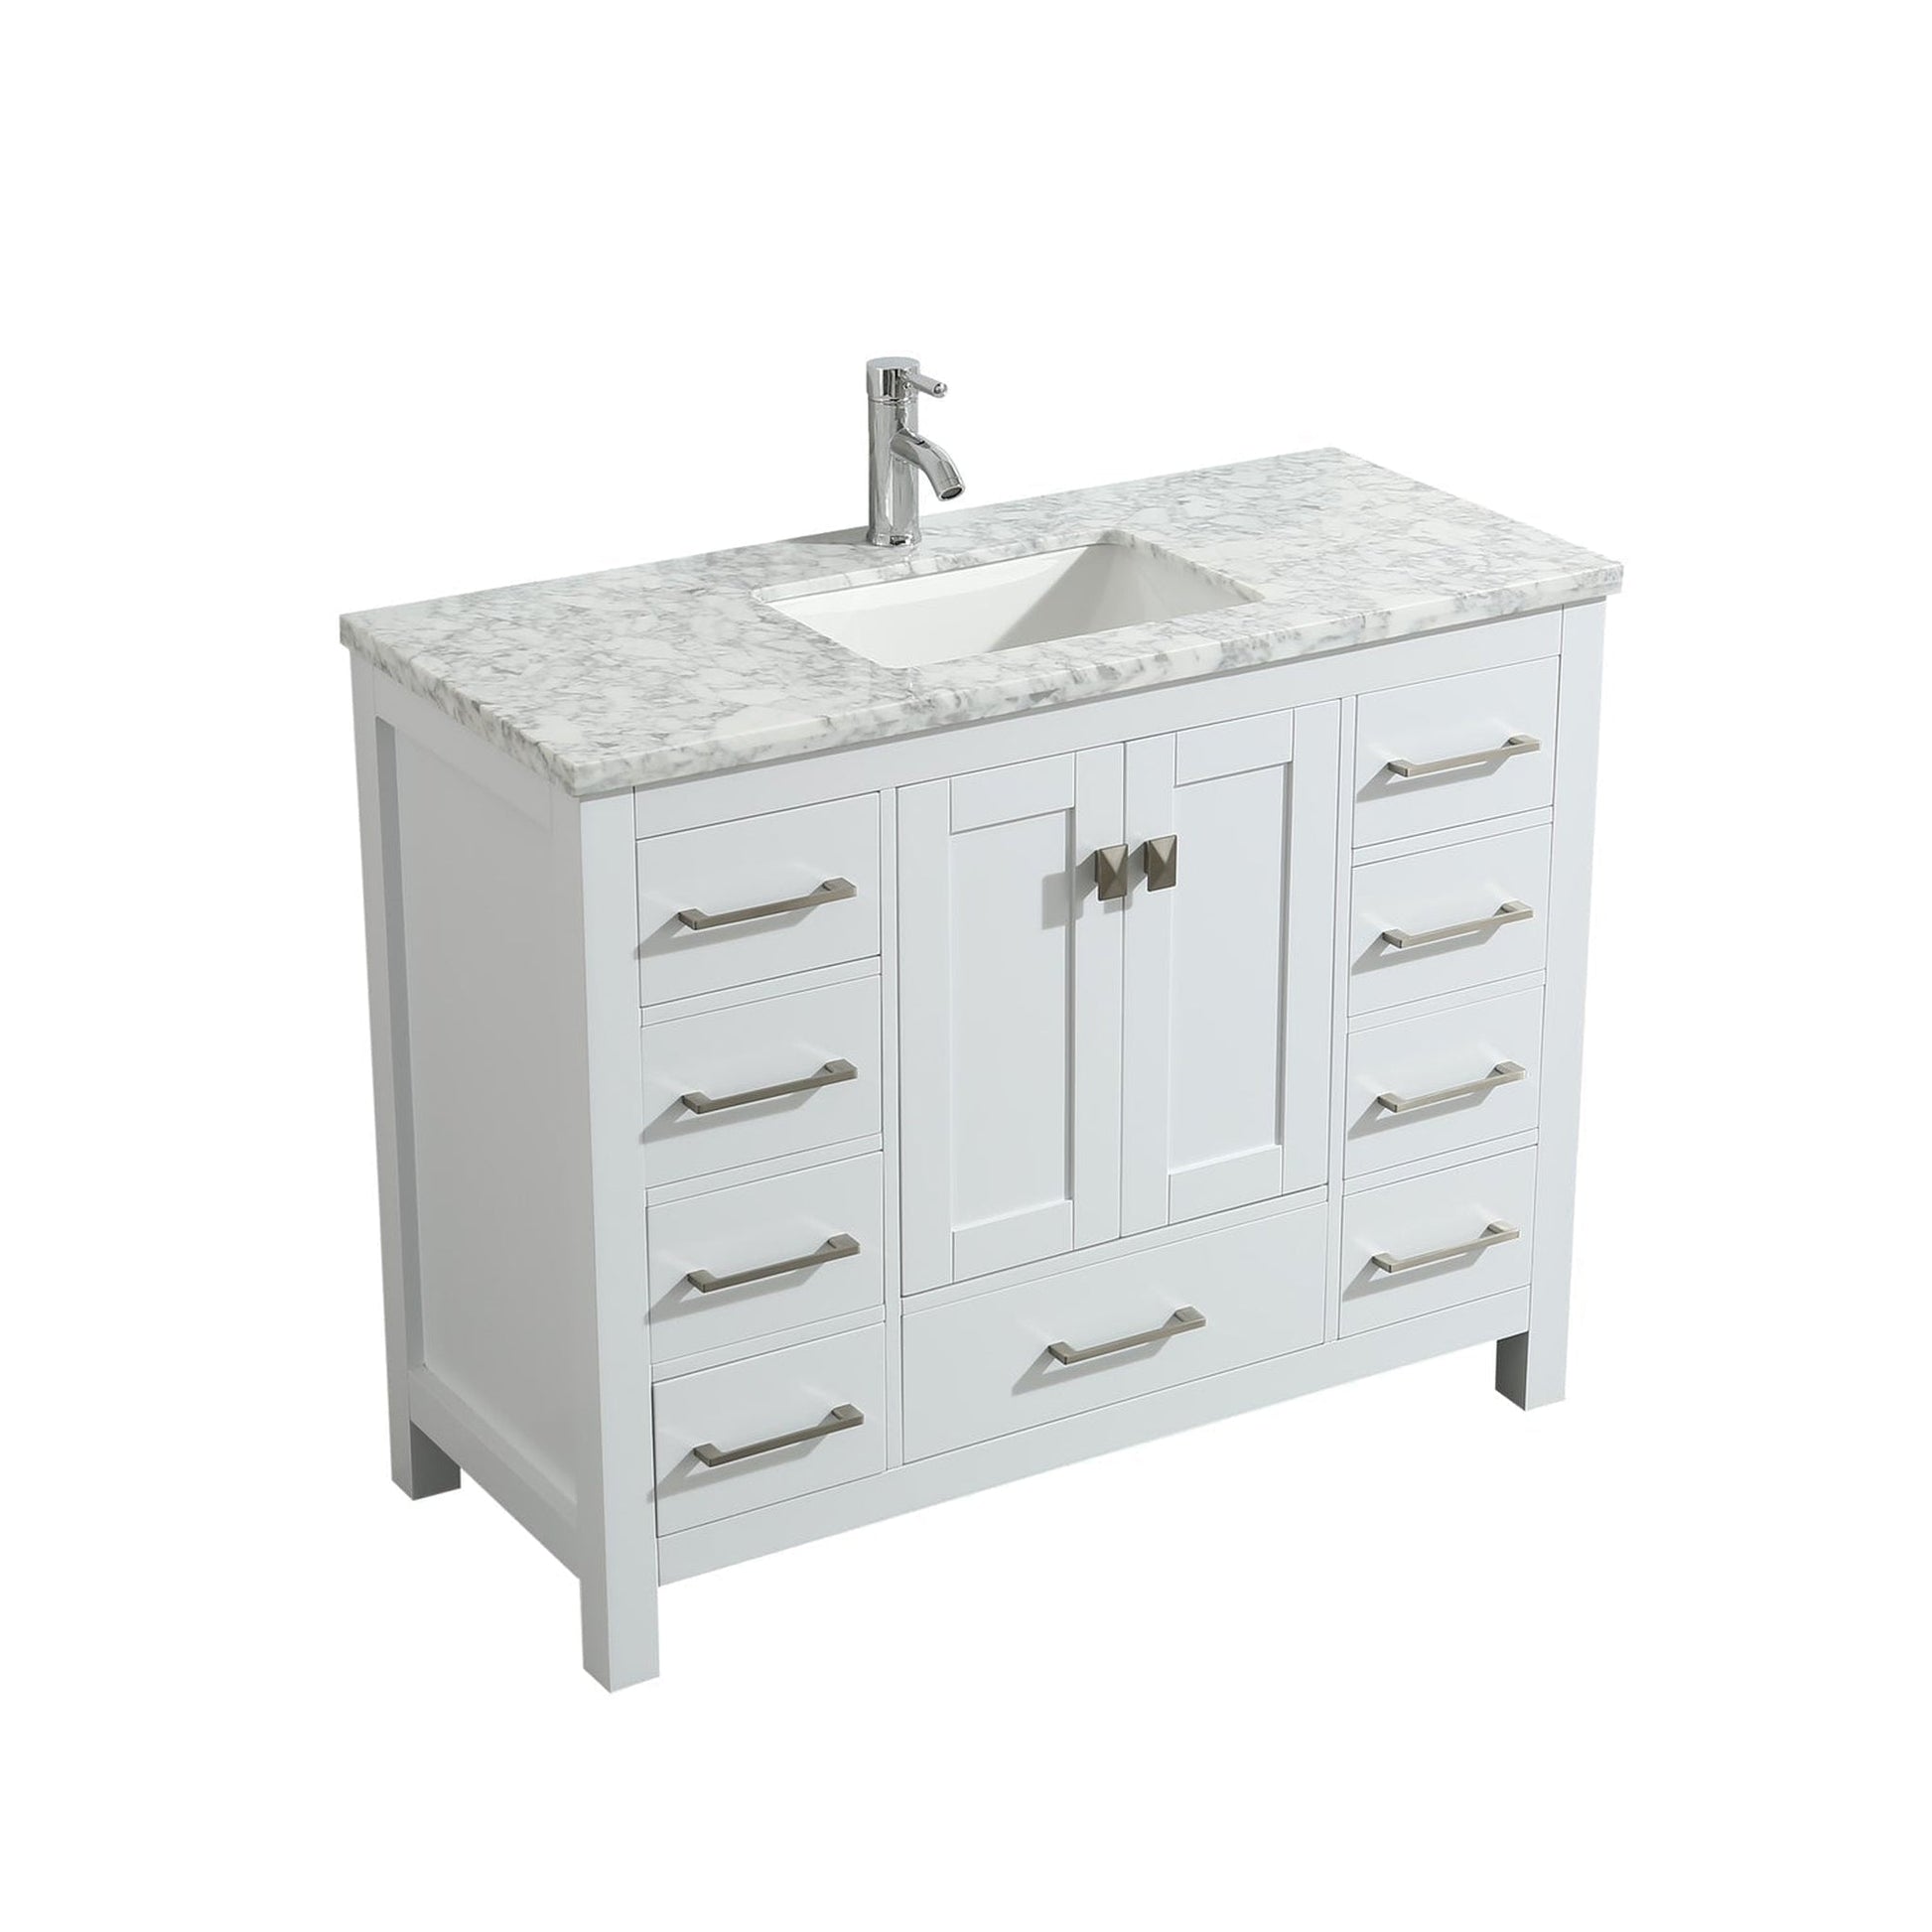 Eviva London 48" x 34" White Freestanding Bathroom Vanity With Carrara Marble Countertop and Single Undermount Sink